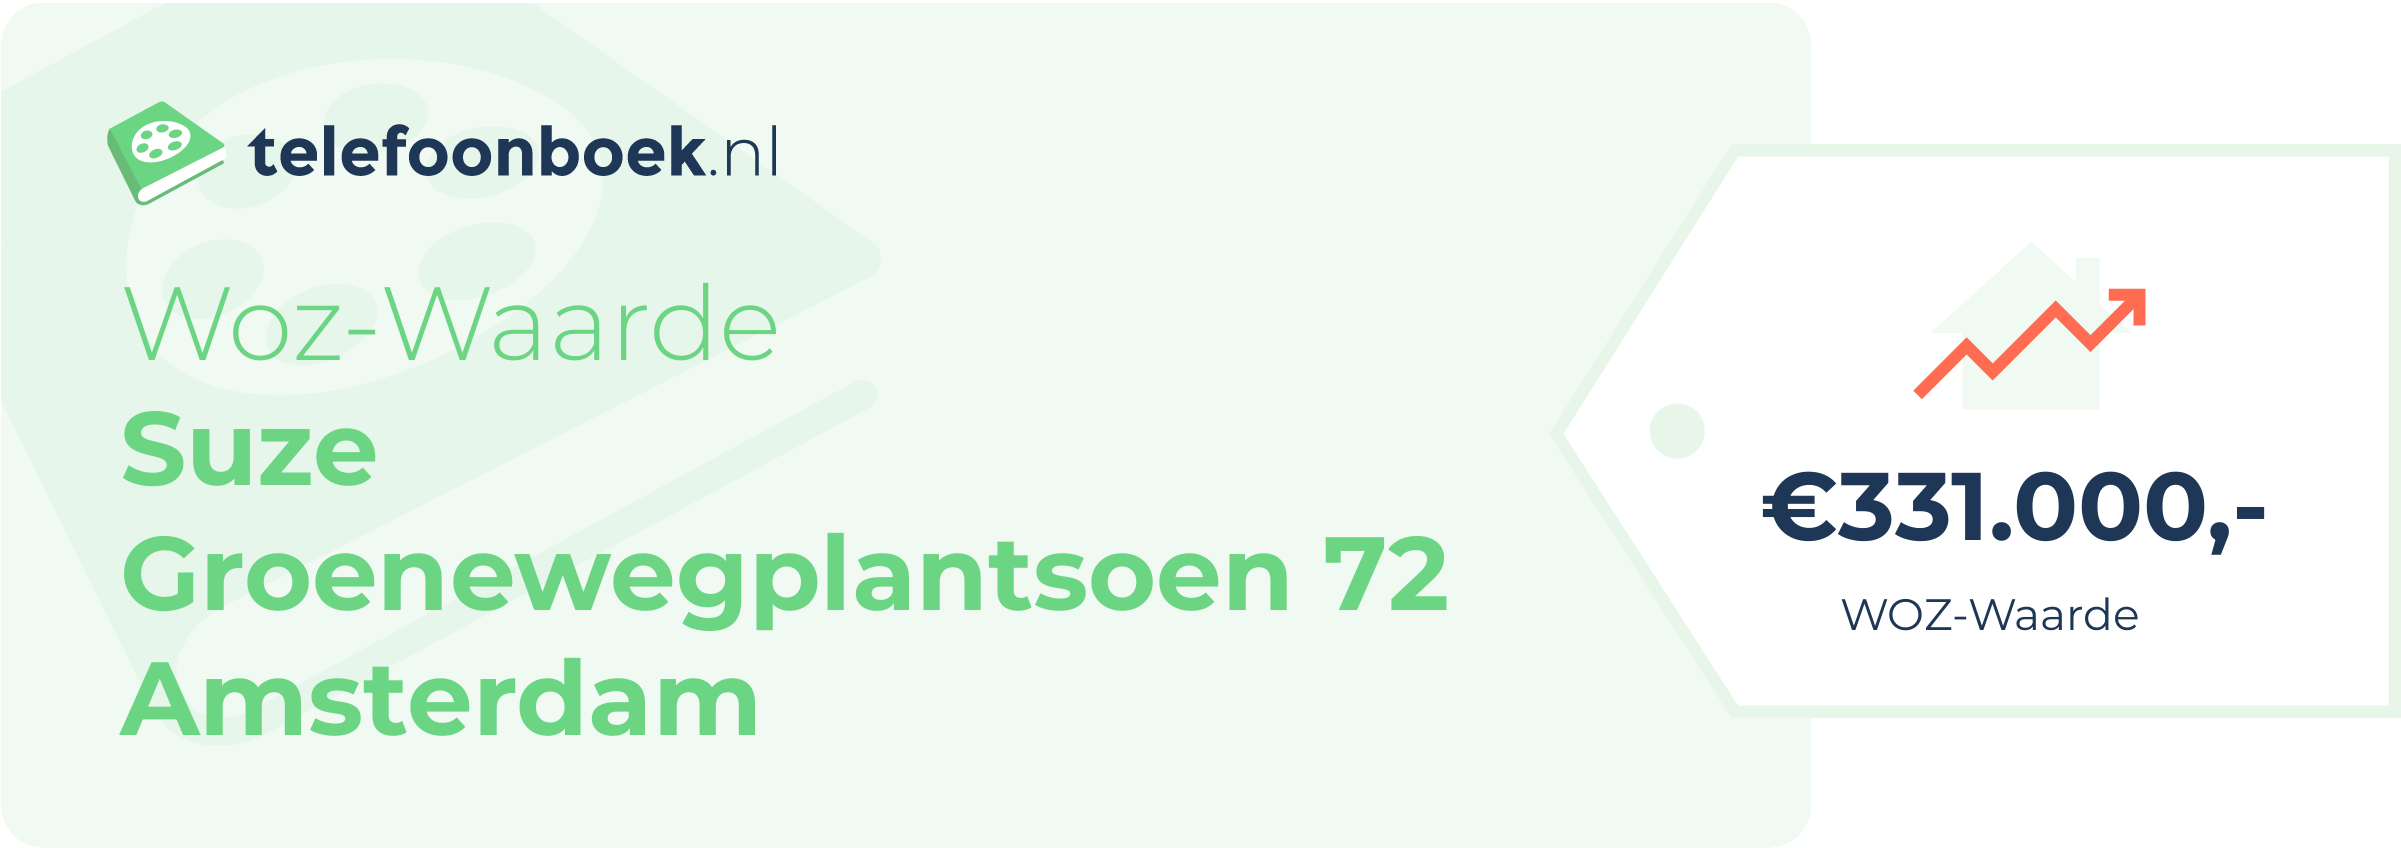 WOZ-waarde Suze Groenewegplantsoen 72 Amsterdam